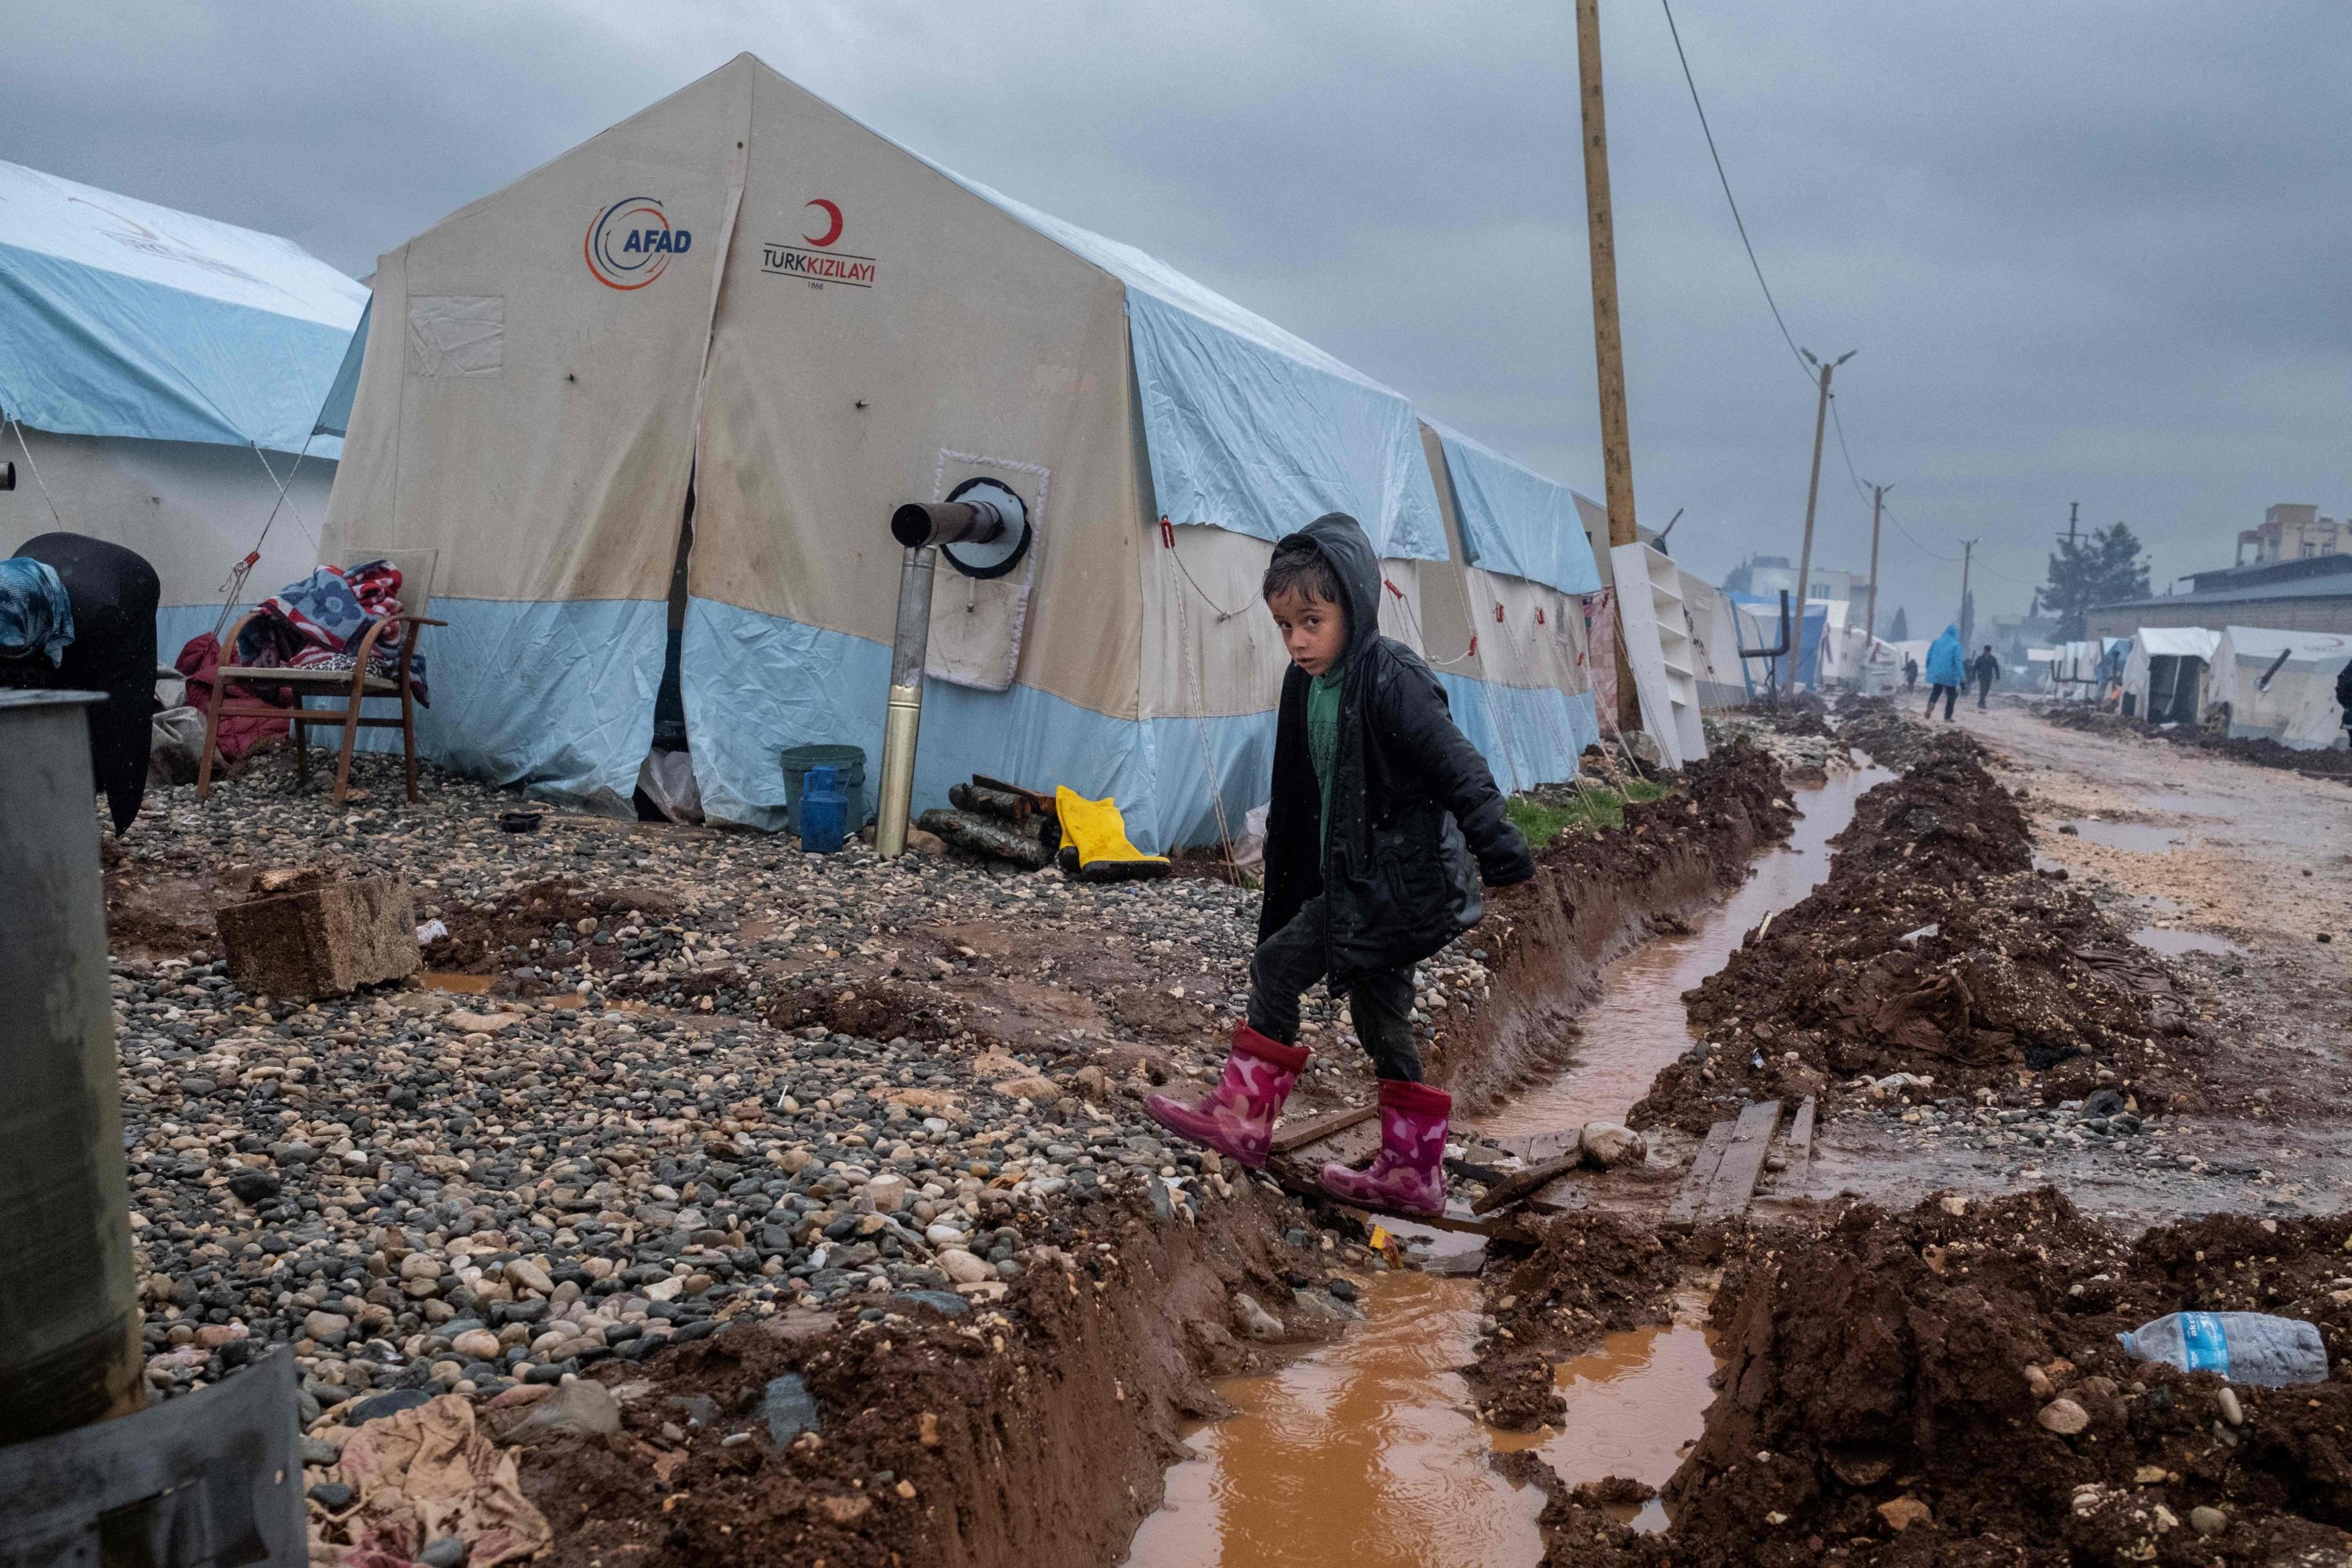 Seorang anak melintasi selokan air di bawah hujan untuk mencapai tenda yang didirikan untuk menampung para pengungsi setelah gempa besar bulan lalu, di Adıyaman, Türkiye tenggara, 25 Maret 2023. (Foto AFP)